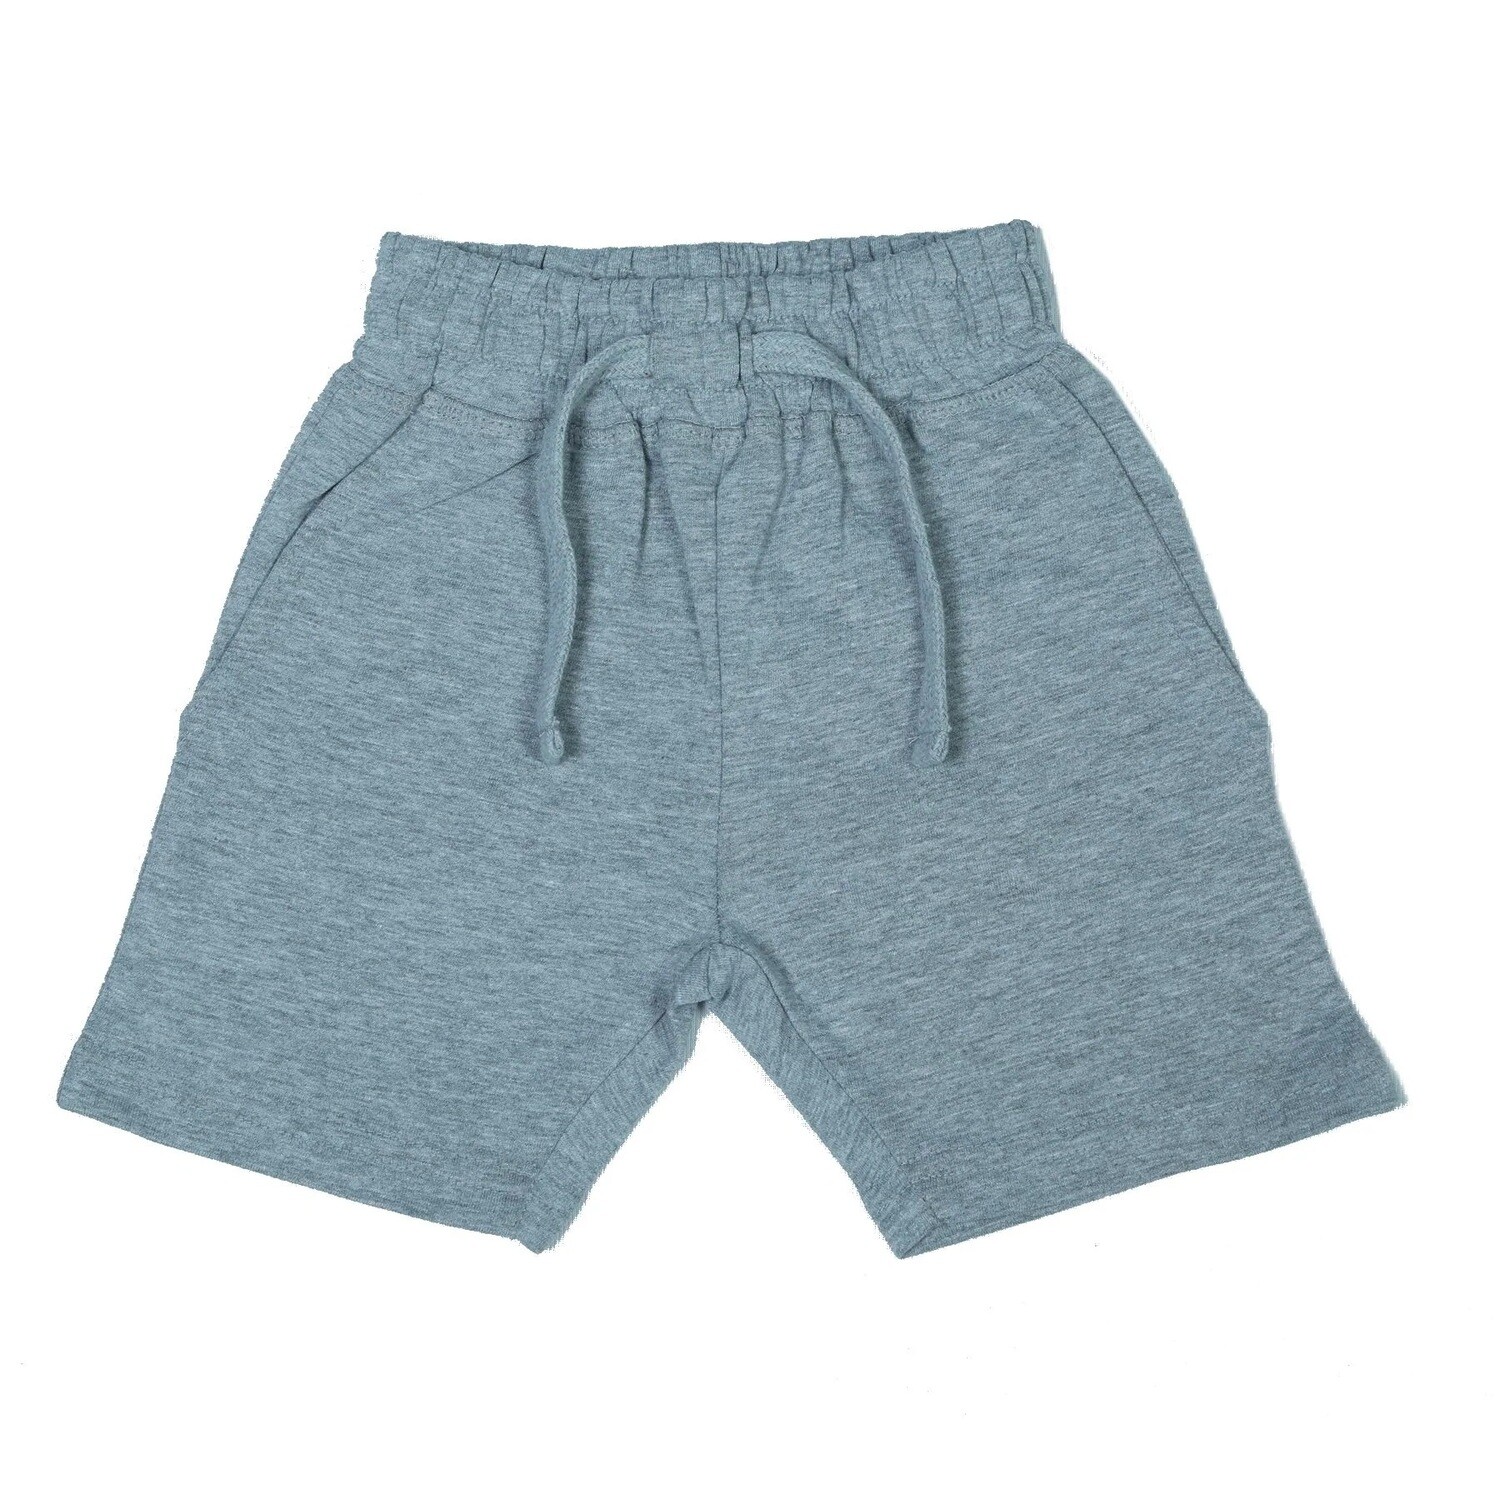 Mish Boys Comfy Shorts- Heather